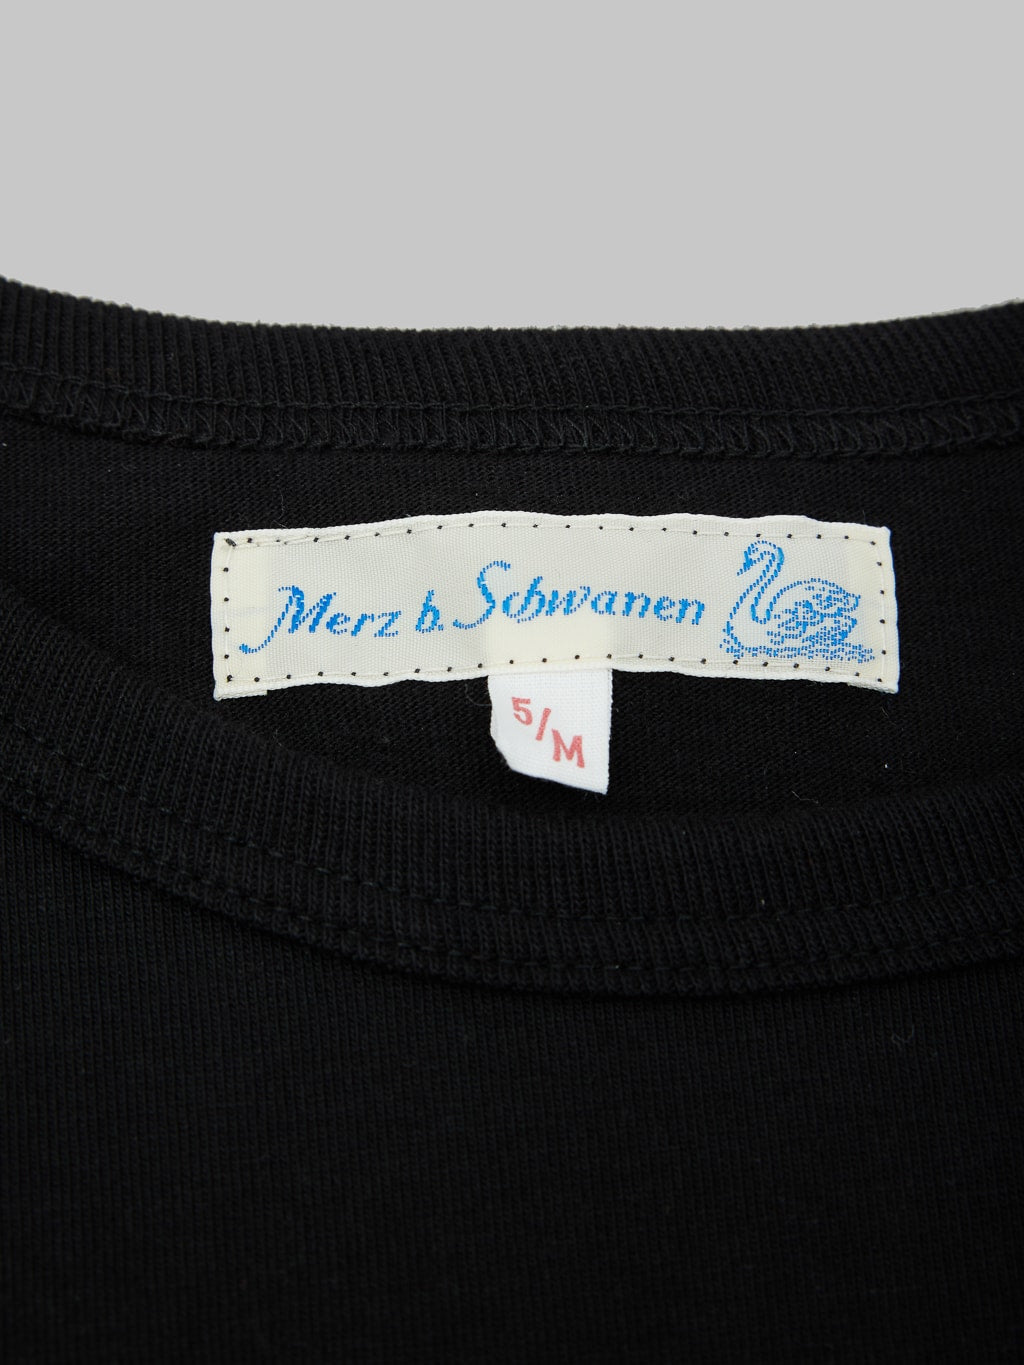 Merz b Schwanen 1950s Loopwheeled Classic TShirt Black size label